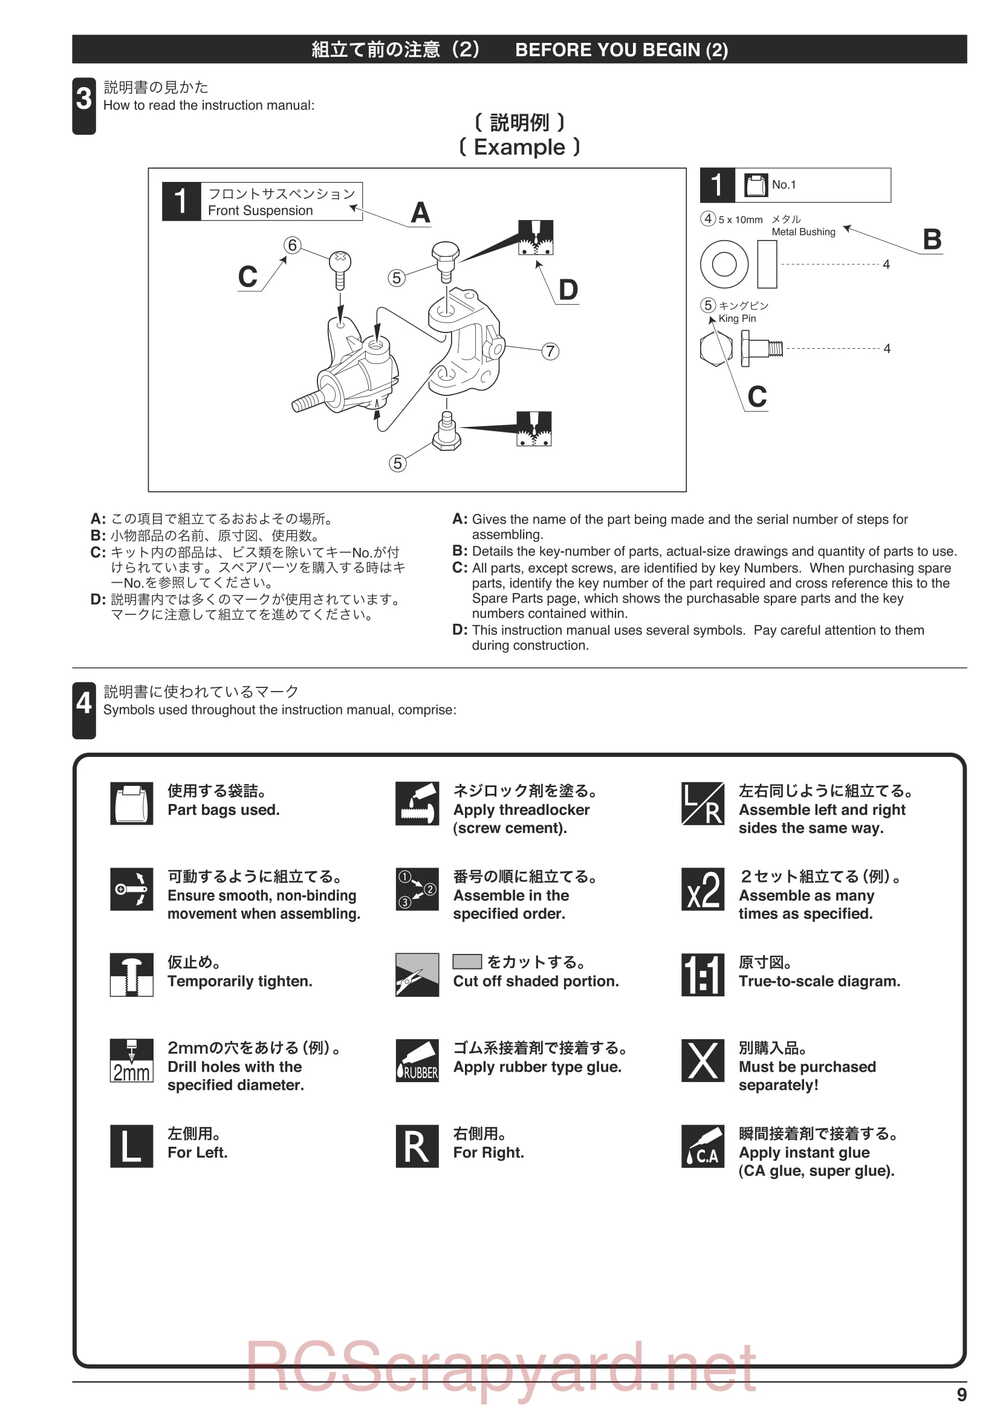 Kyosho - 31007 - KF01 - Manual - Page 09